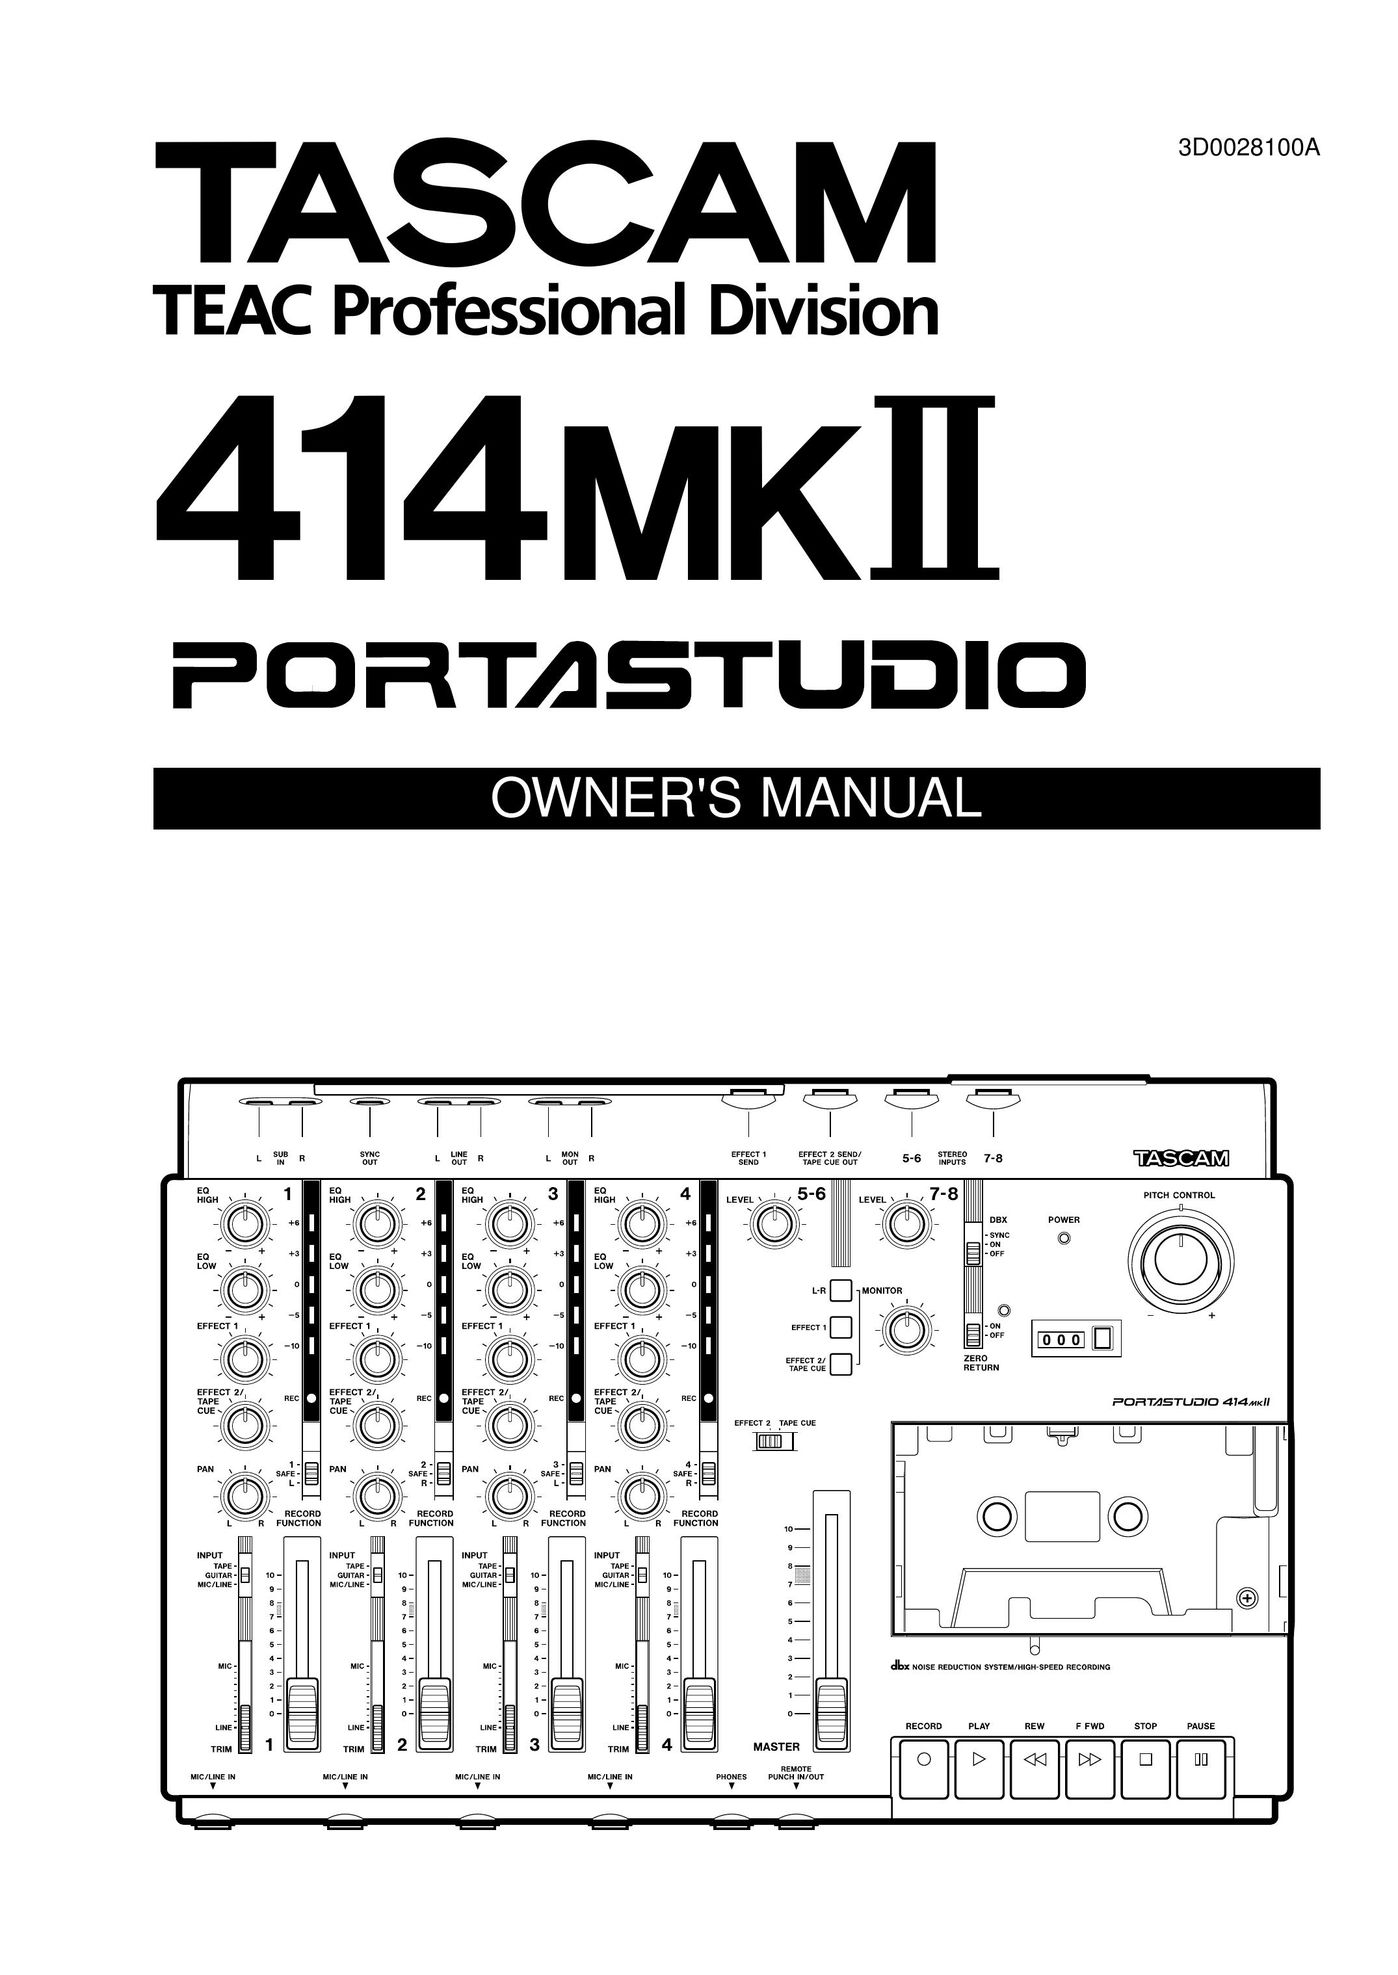 Tascam 414MKII Microcassette Recorder User Manual